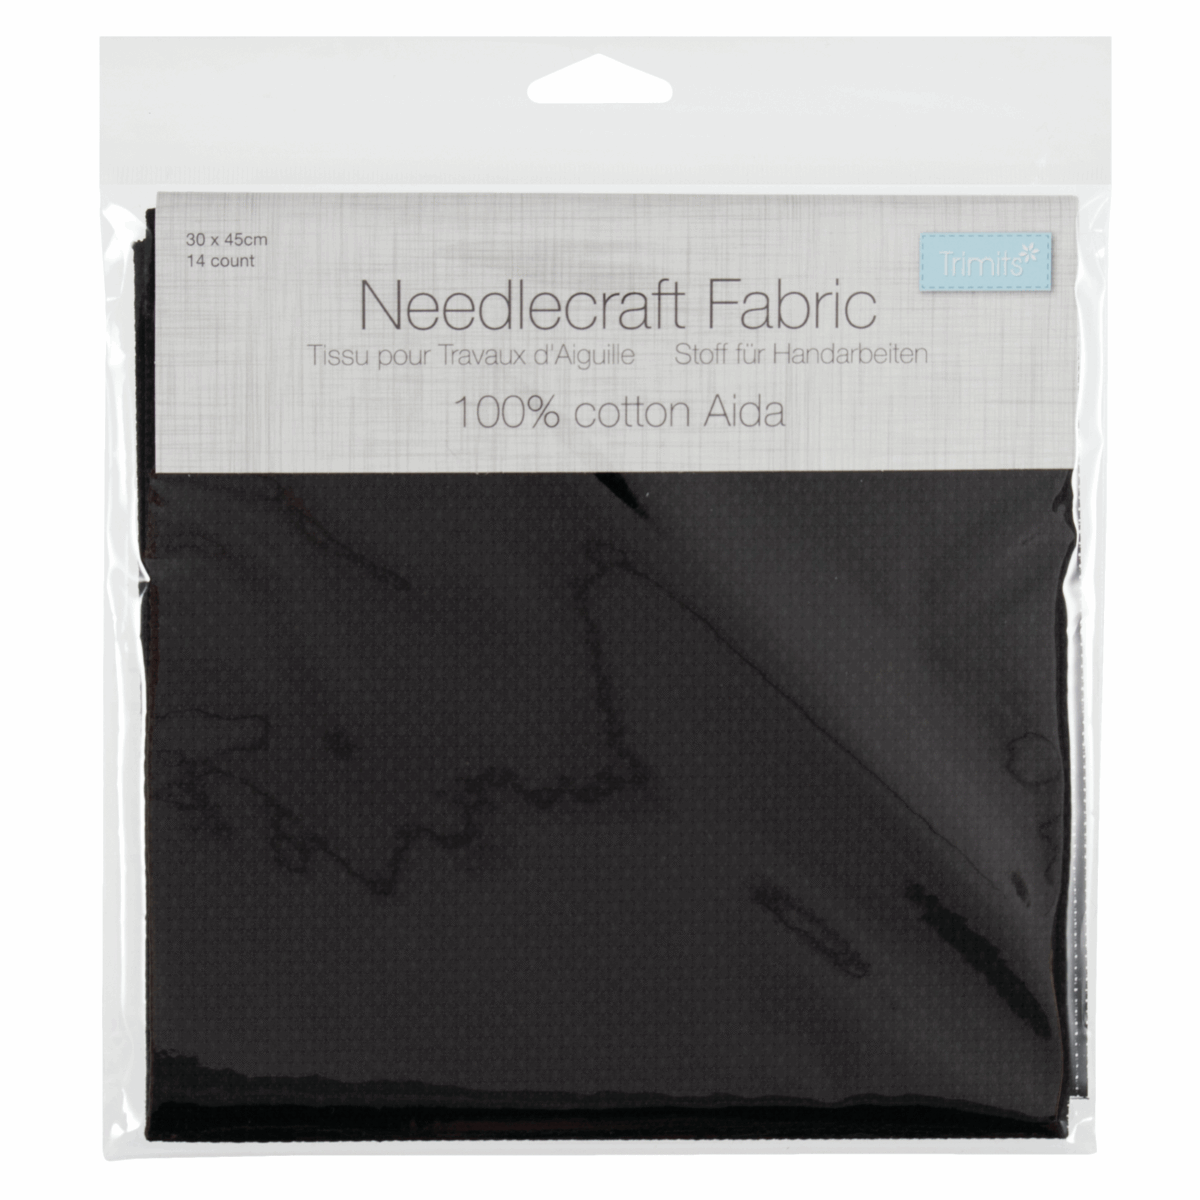 Trimits Black Needlecraft Fabric - Aida 14 Count 45 x 30cm